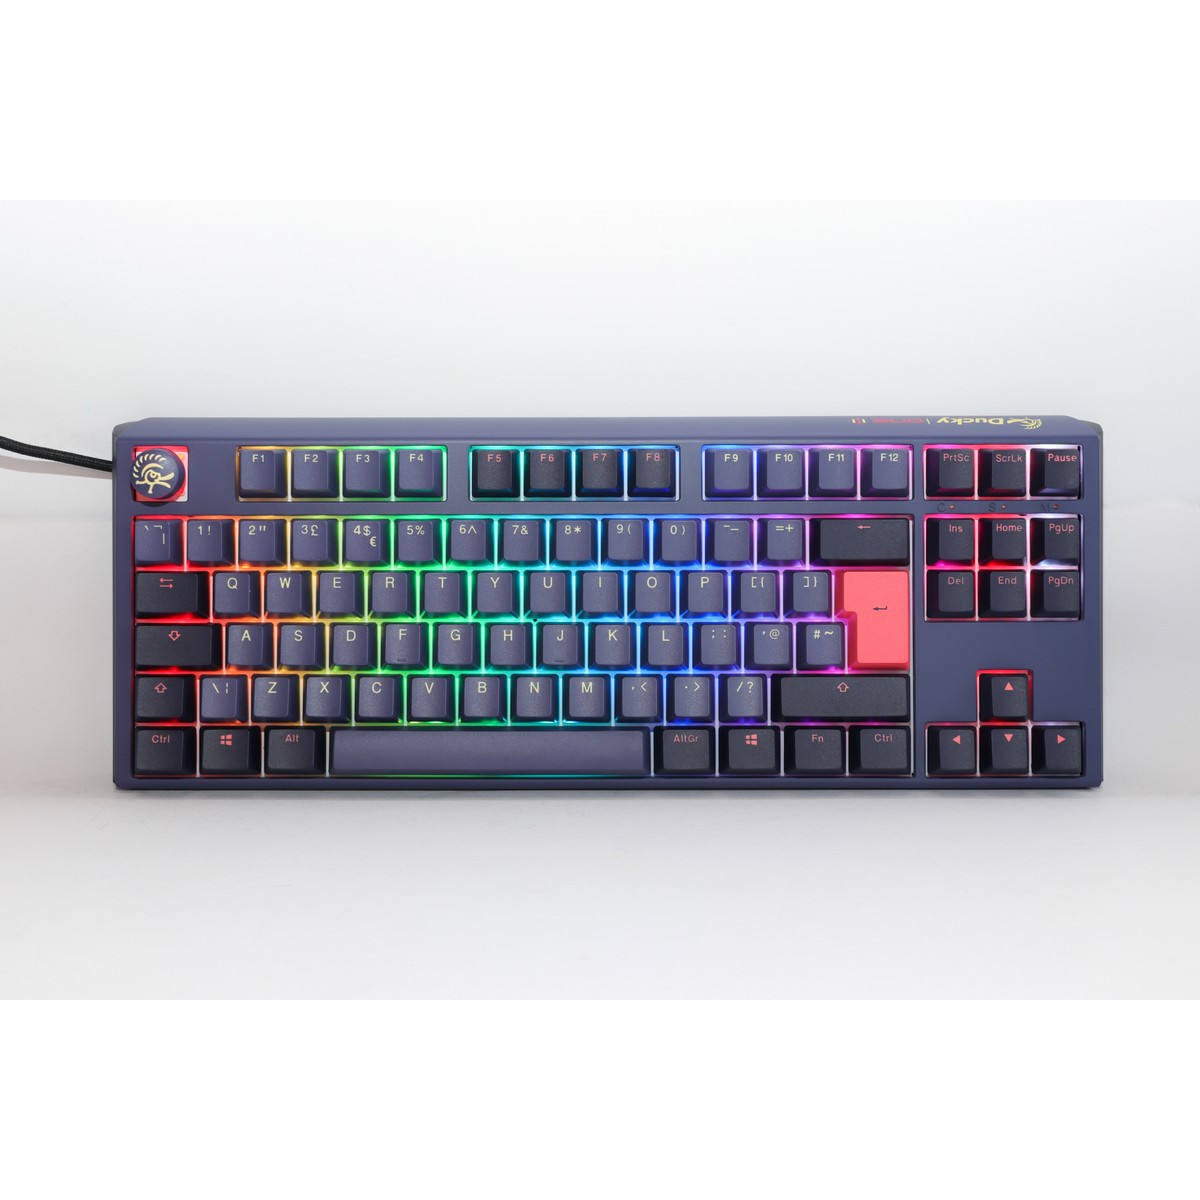 Ducky One 3 Cosmic TKL 80% USB RGB Mechanical Gaming Keyboard Cherry MX Red Switch - UK Layout